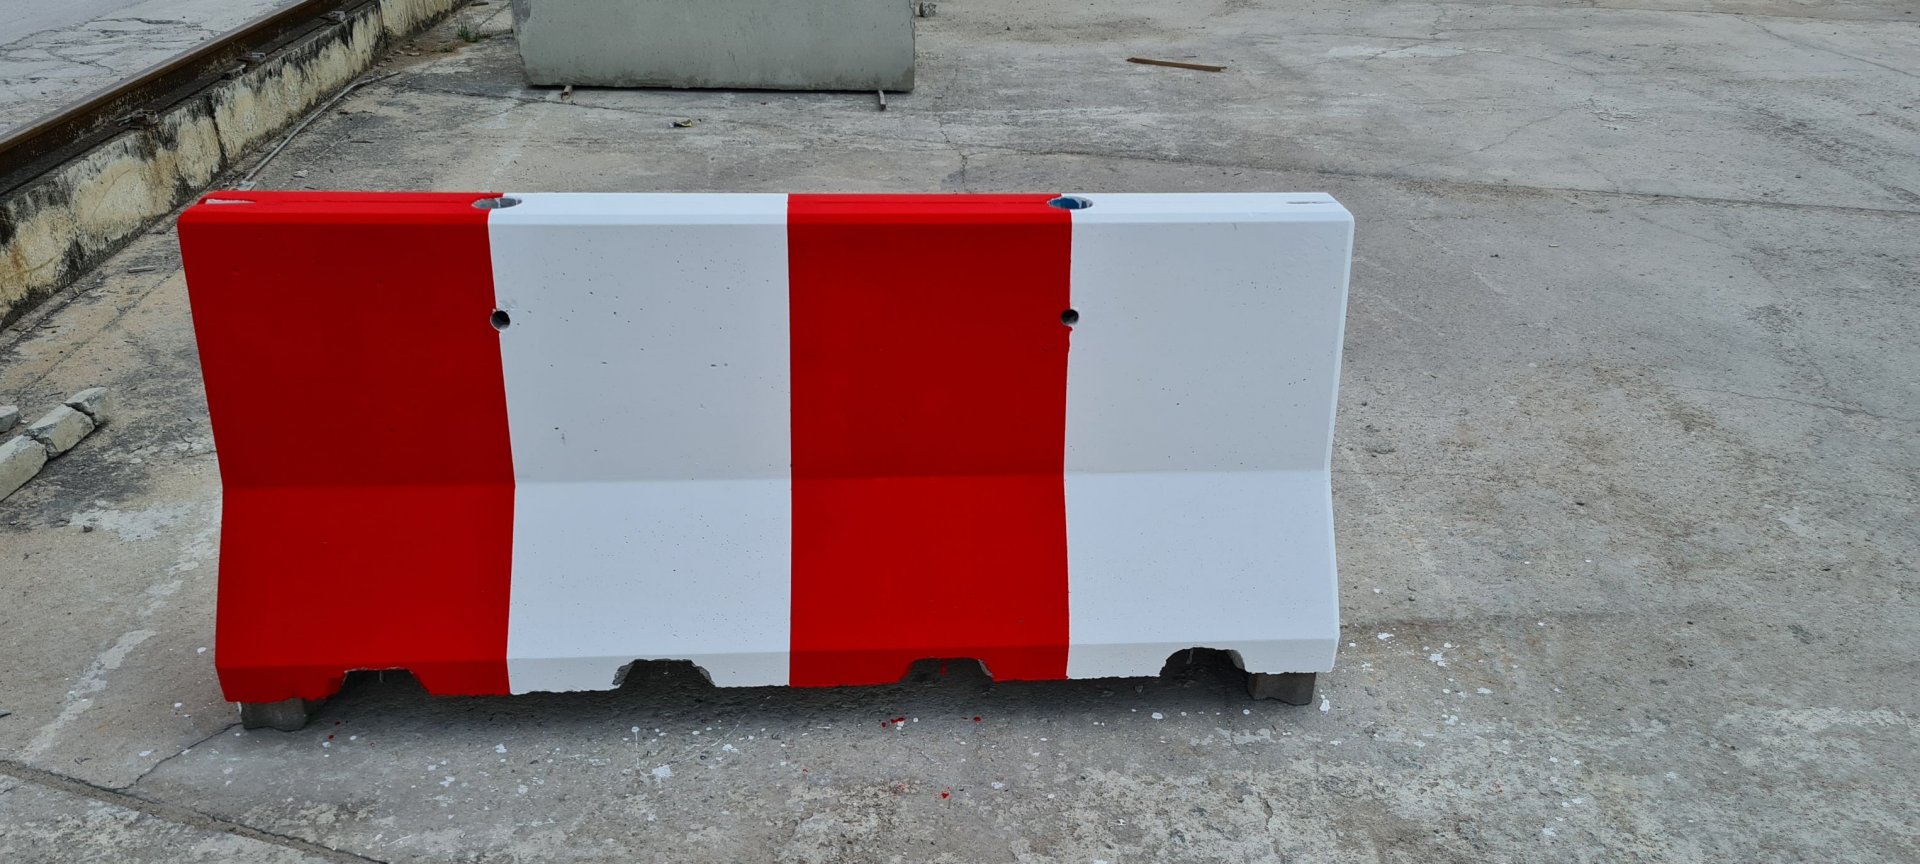 Barrier Type 1 ทาสีขาว-แดง เจาะรู ล๊อคด้วยน๊อต และติดตั้งราวเหล็ก